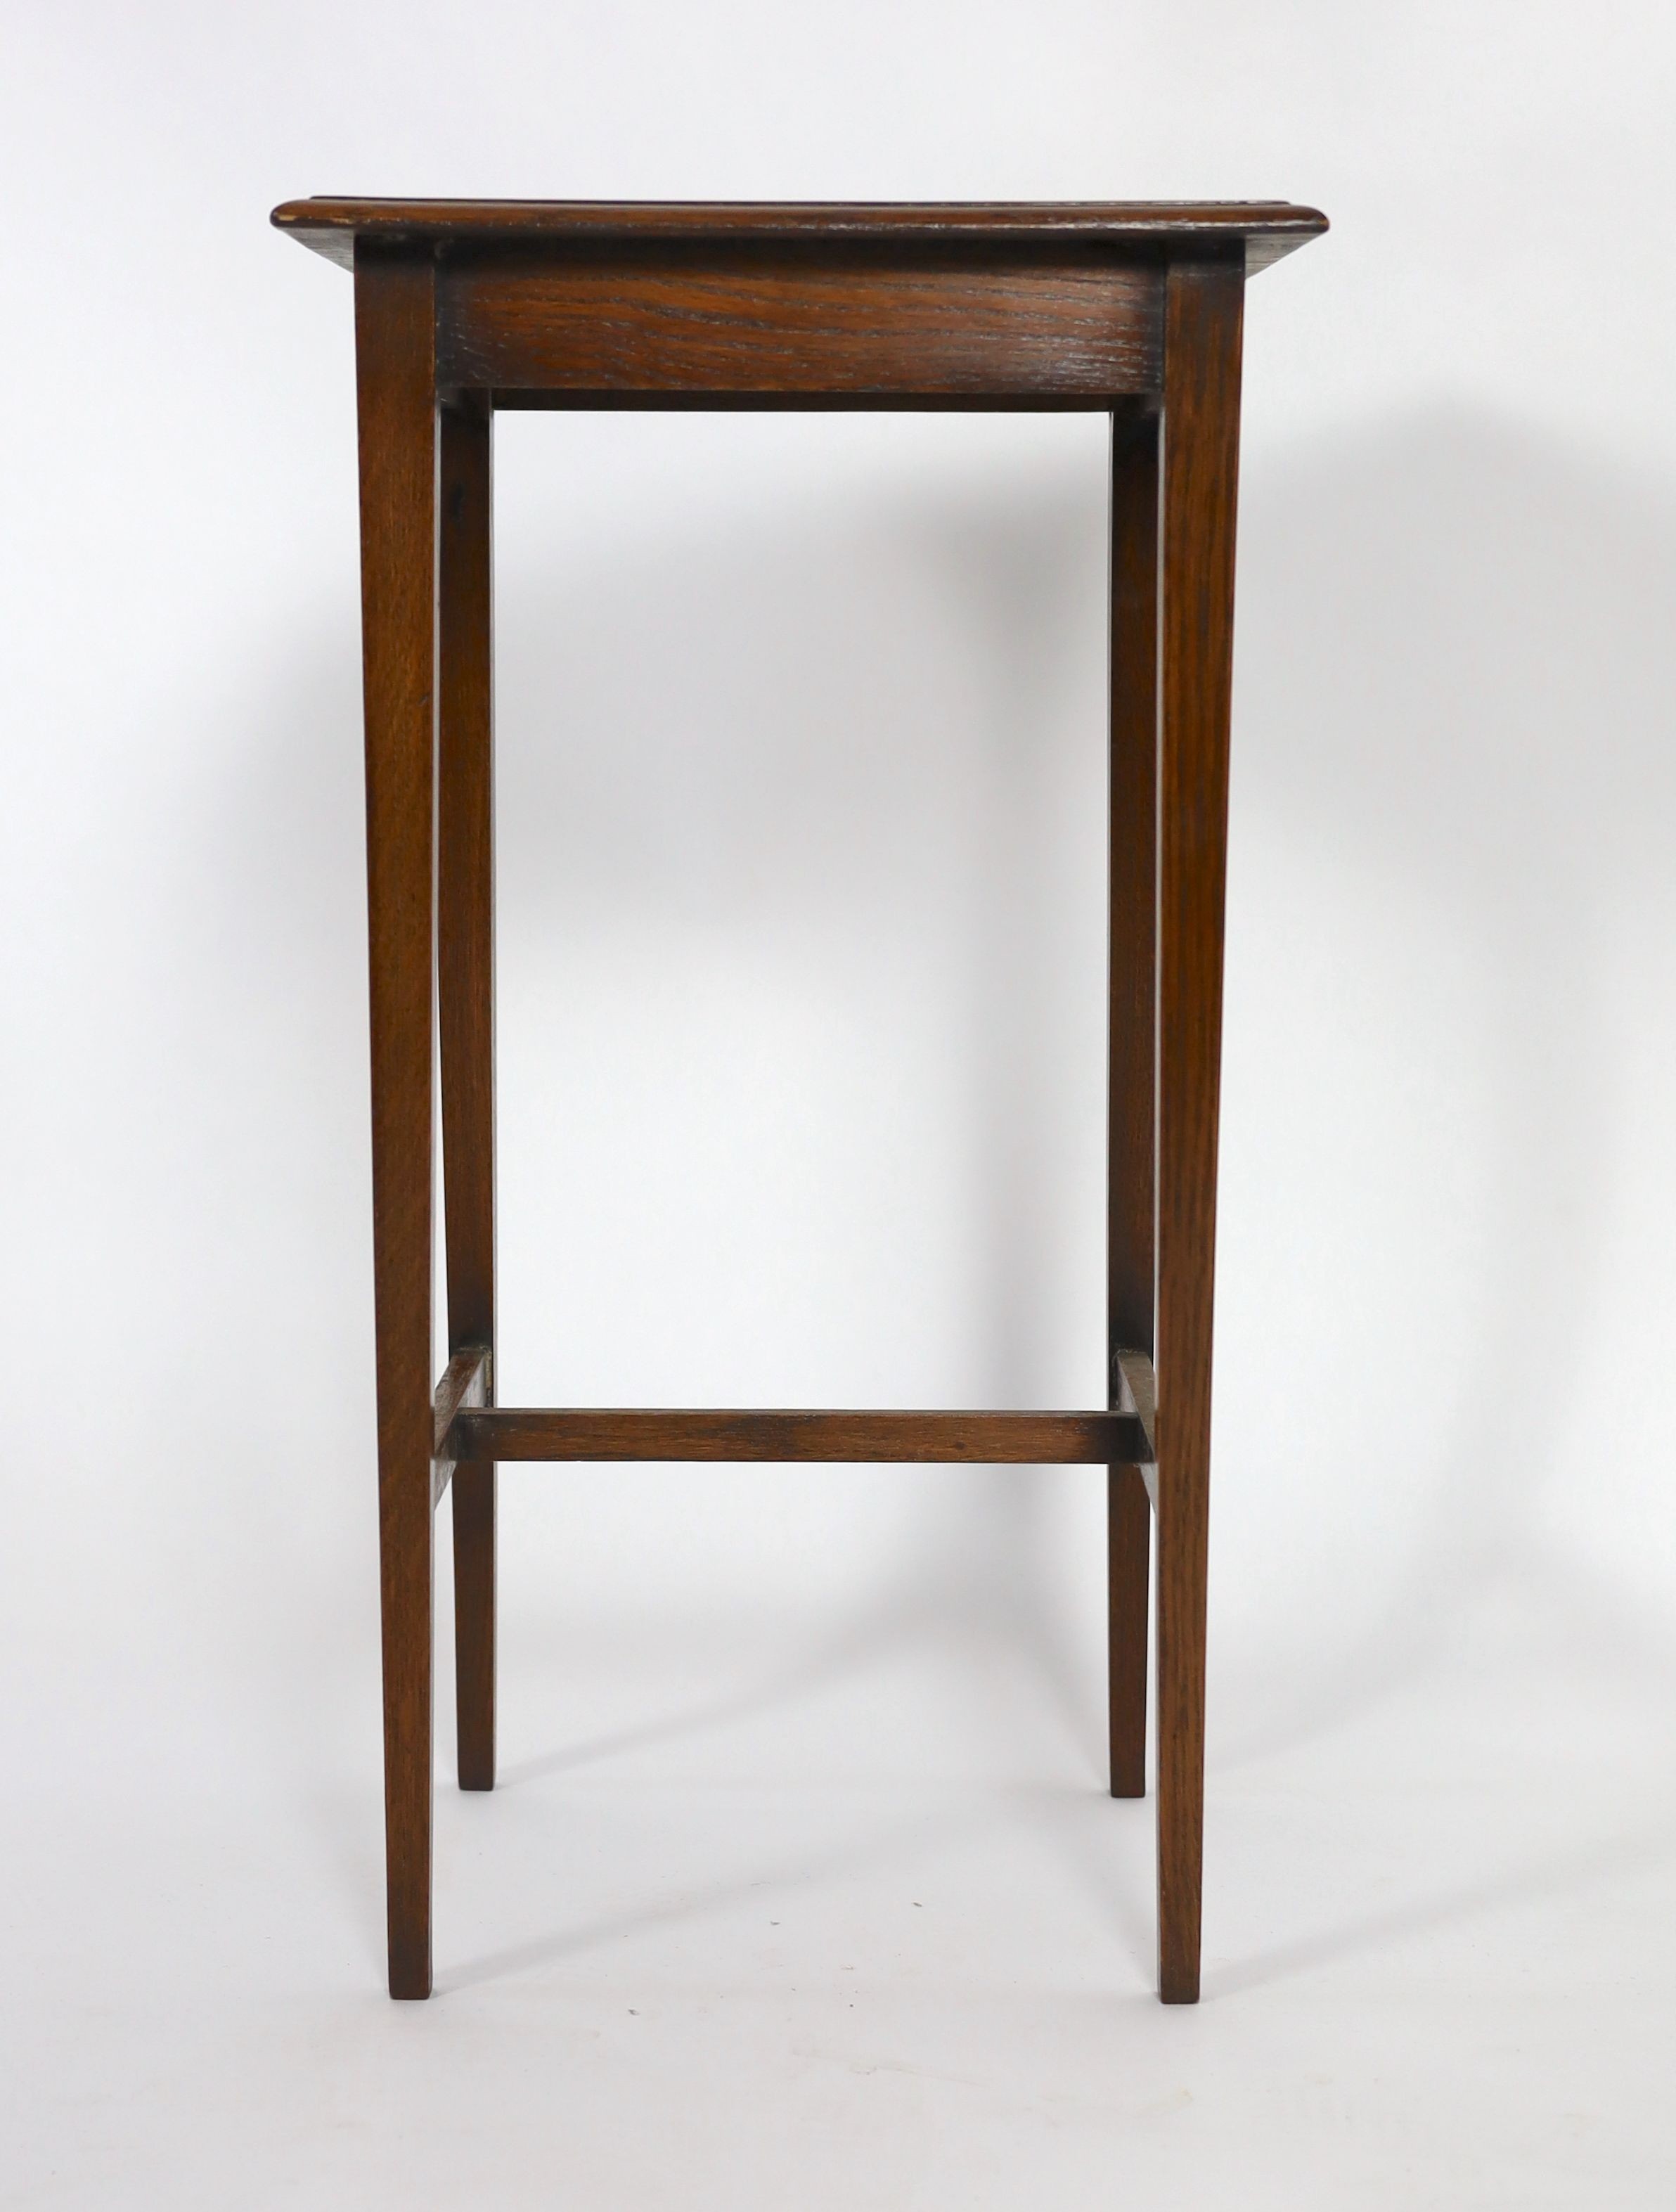 An early 20th century rectangular oak occasional table, width 36cm depth 33cm height 66cm